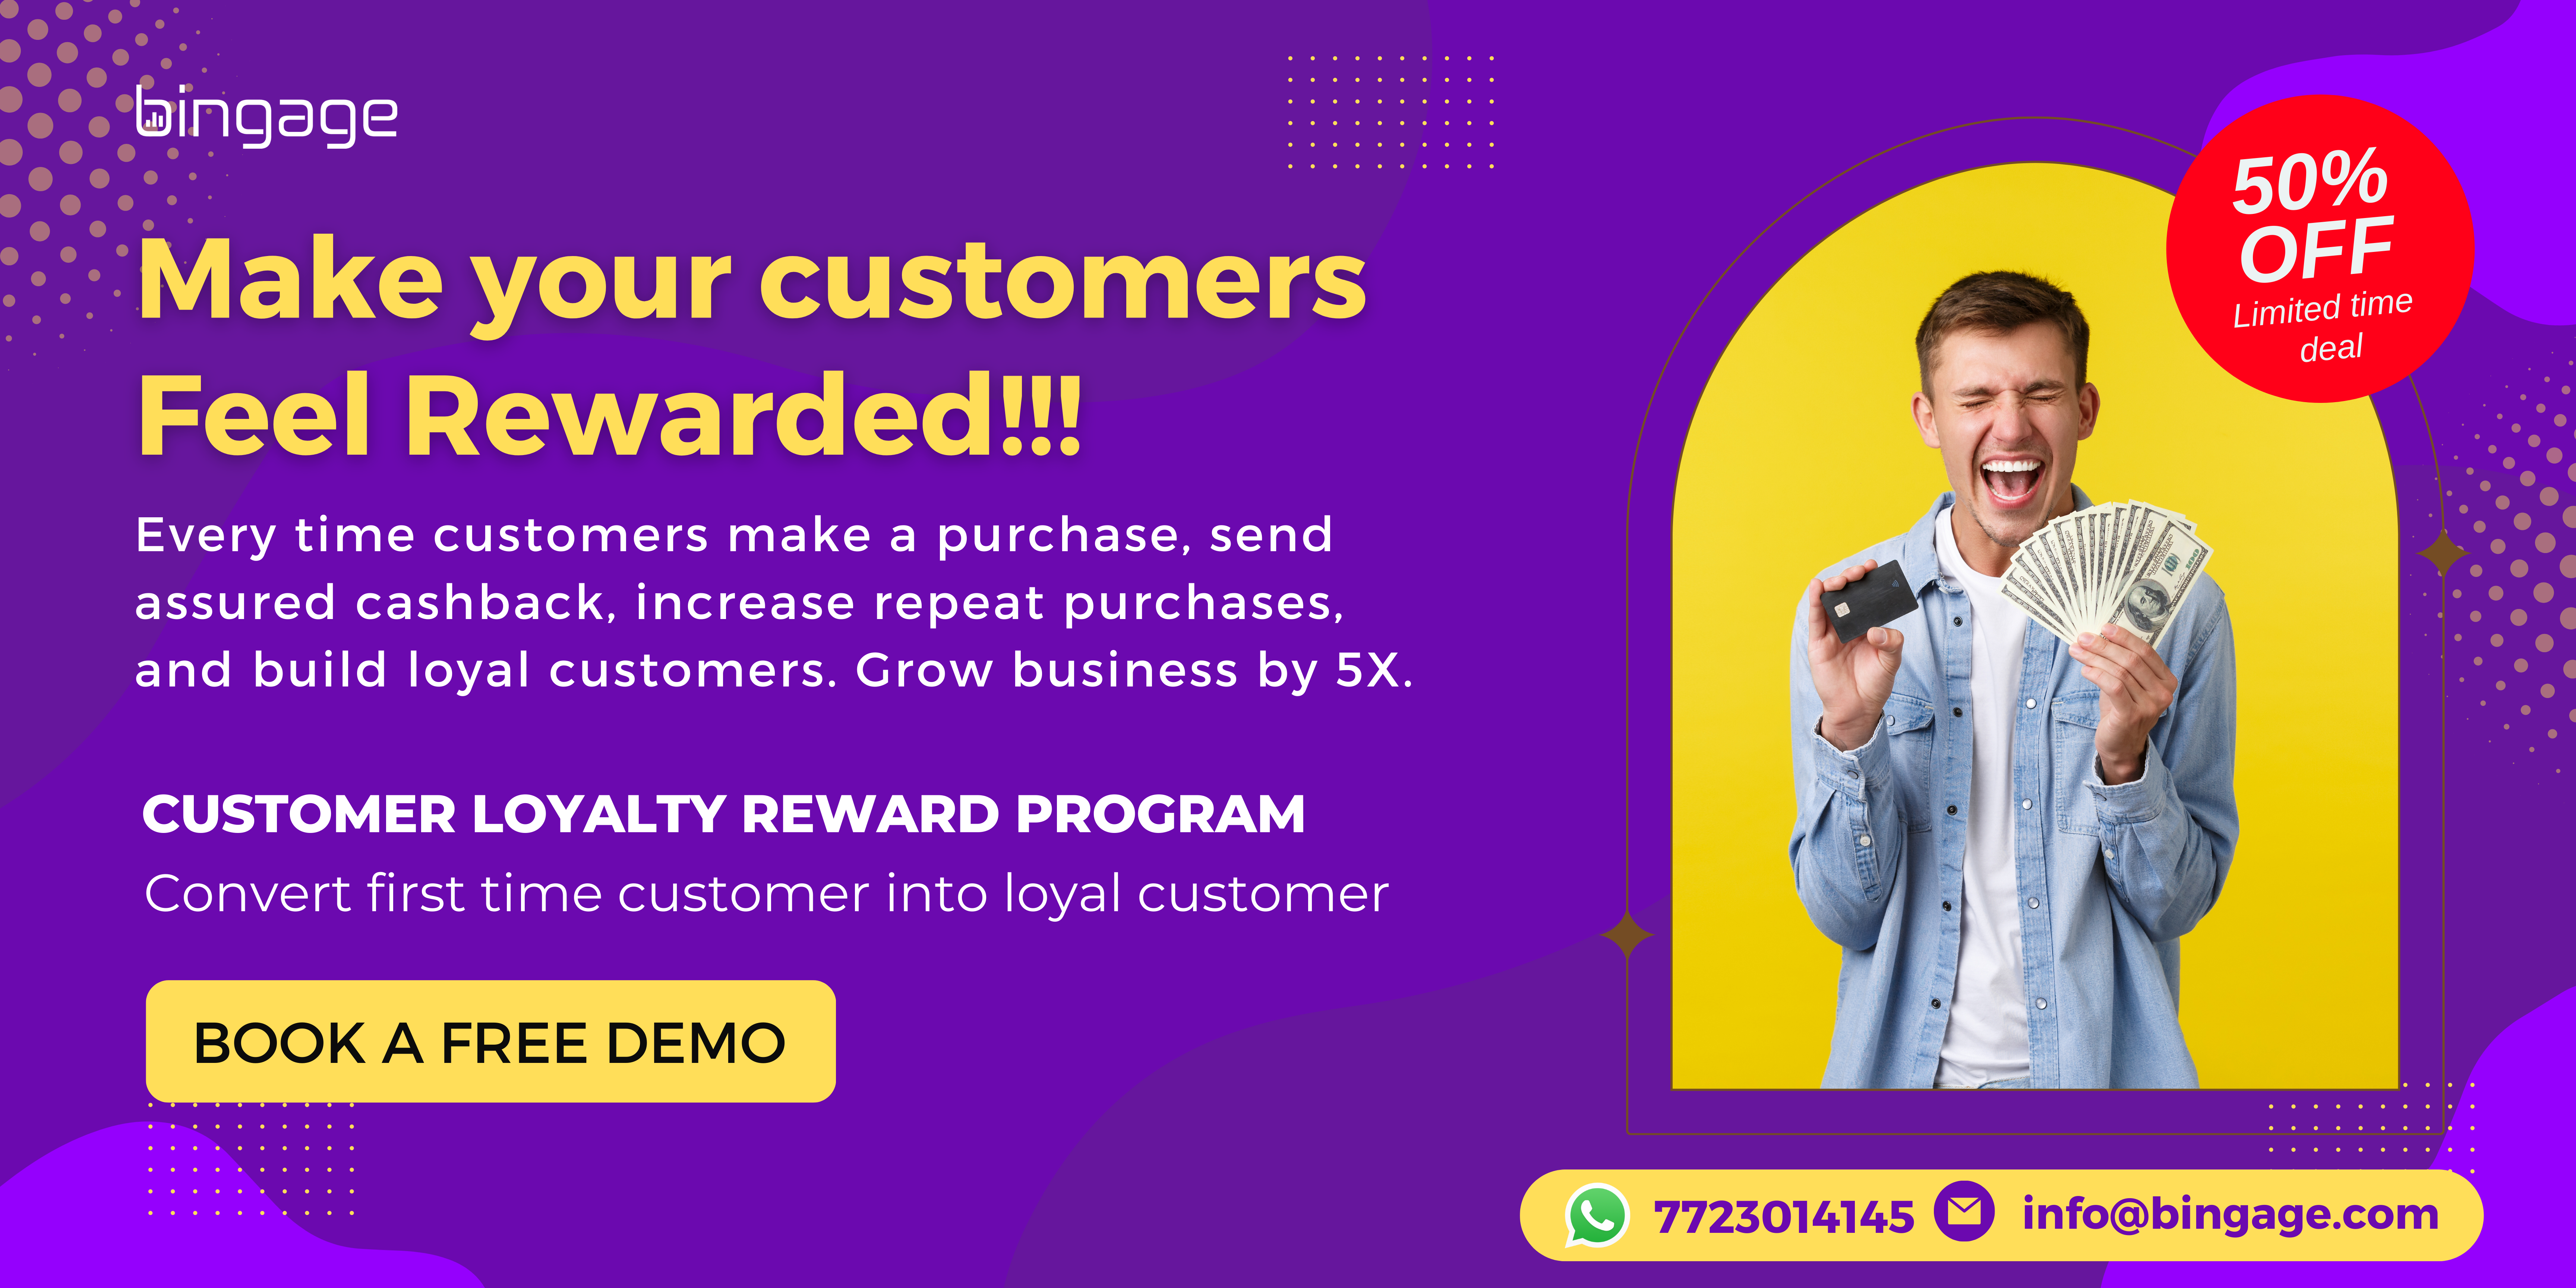 customer loyalty reward program for ecommerce, retail and restaurants